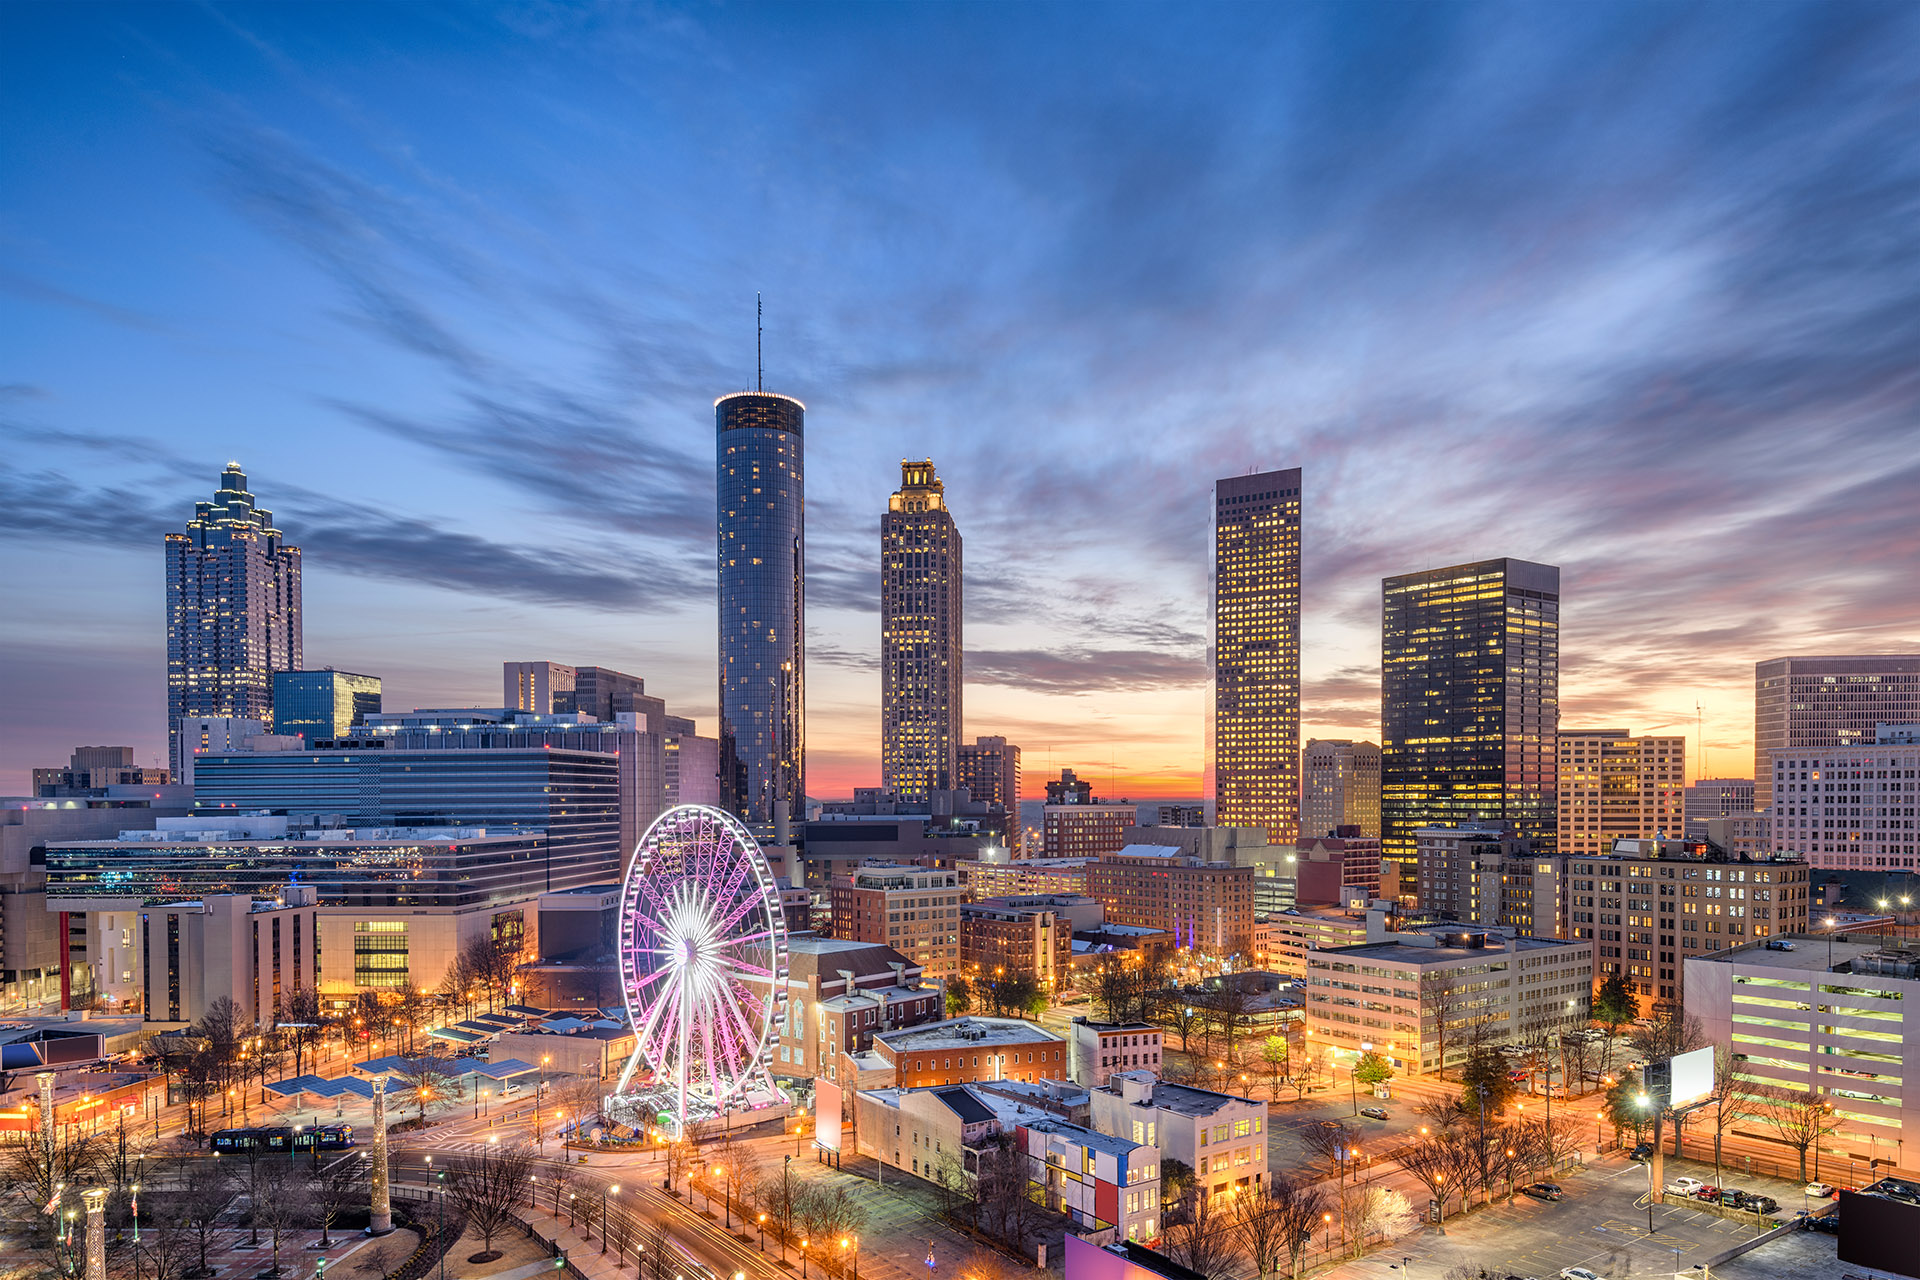 Atlanta Georgia skyline